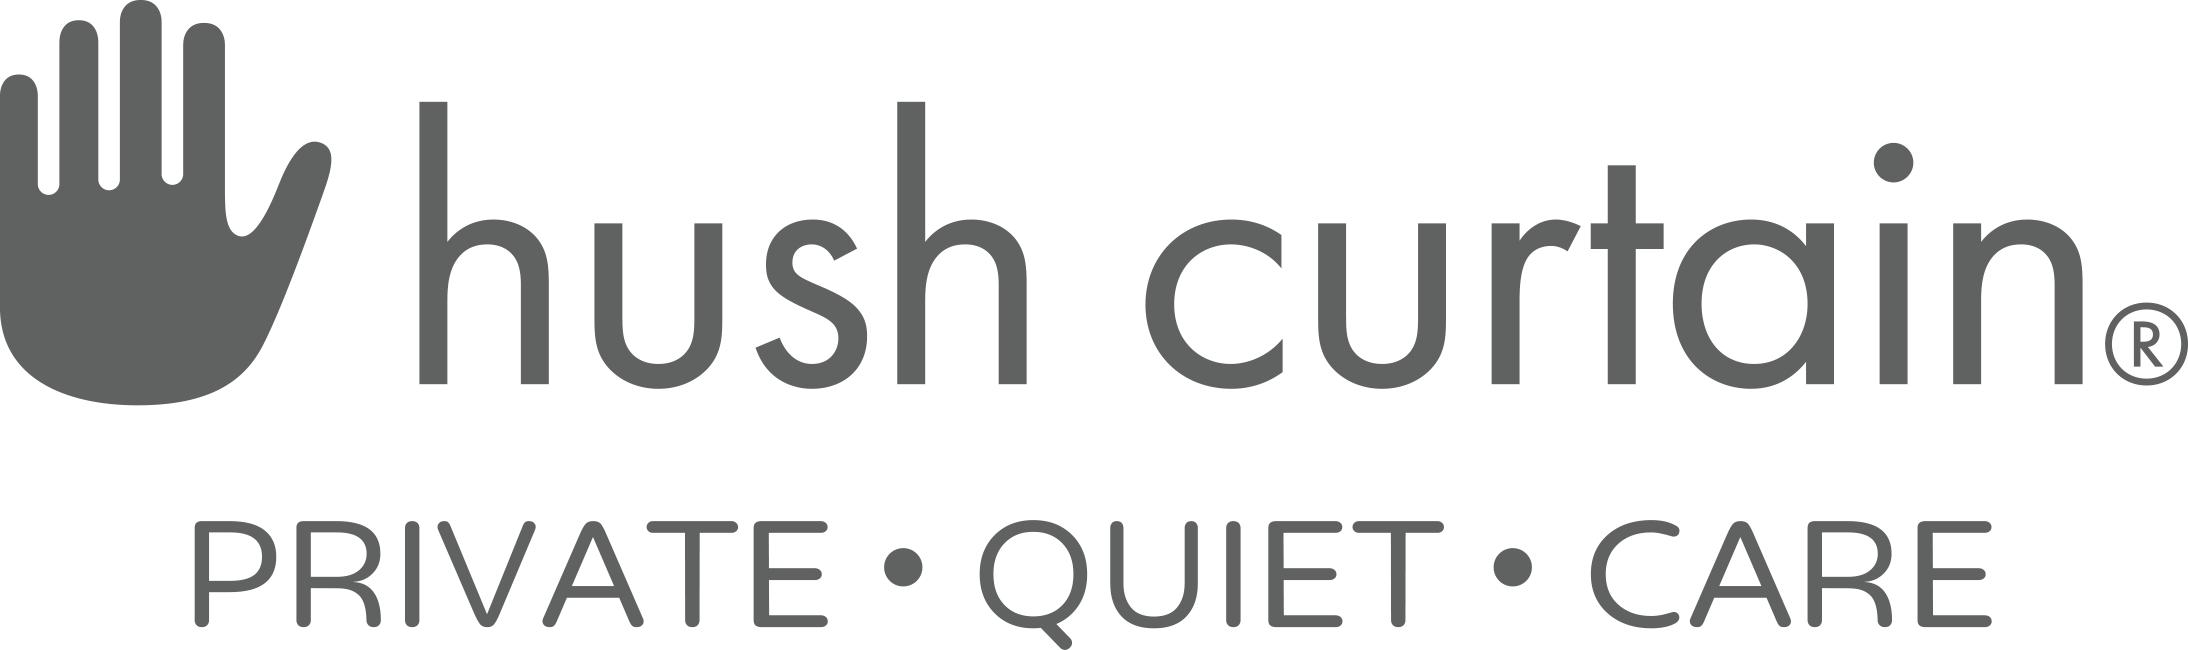 Hush Curtain Logo.png